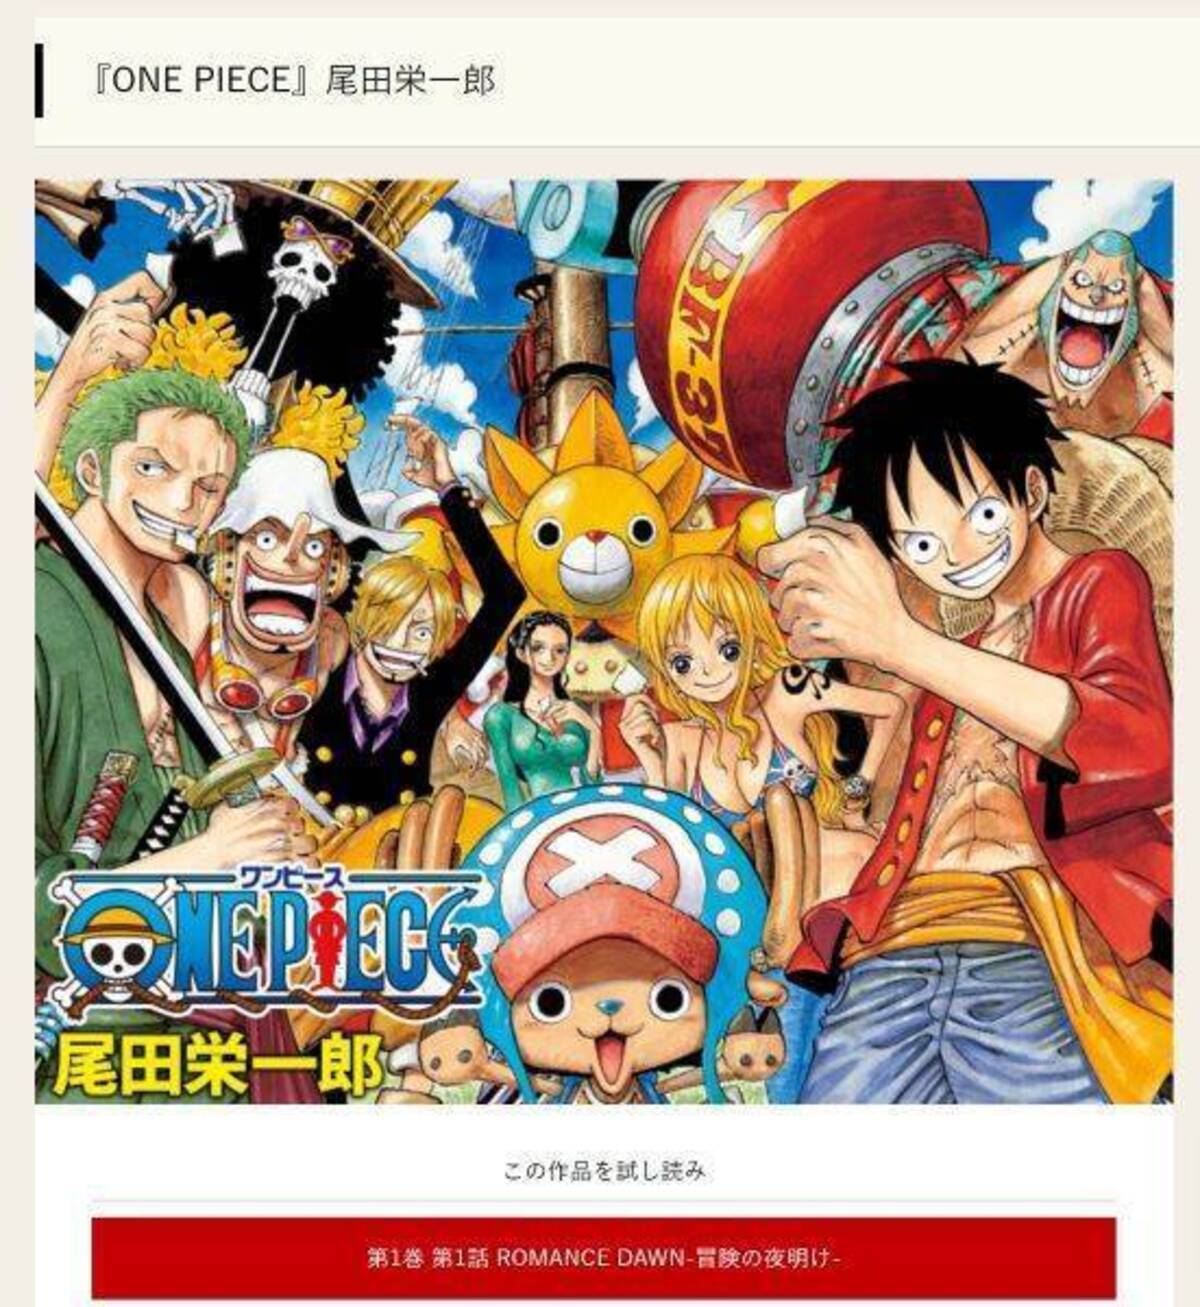 One Piece 物語の終着点はどうなる ルフィの 夢の果て や麦わら帽子の伏線とは 22年7月31日 エキサイトニュース